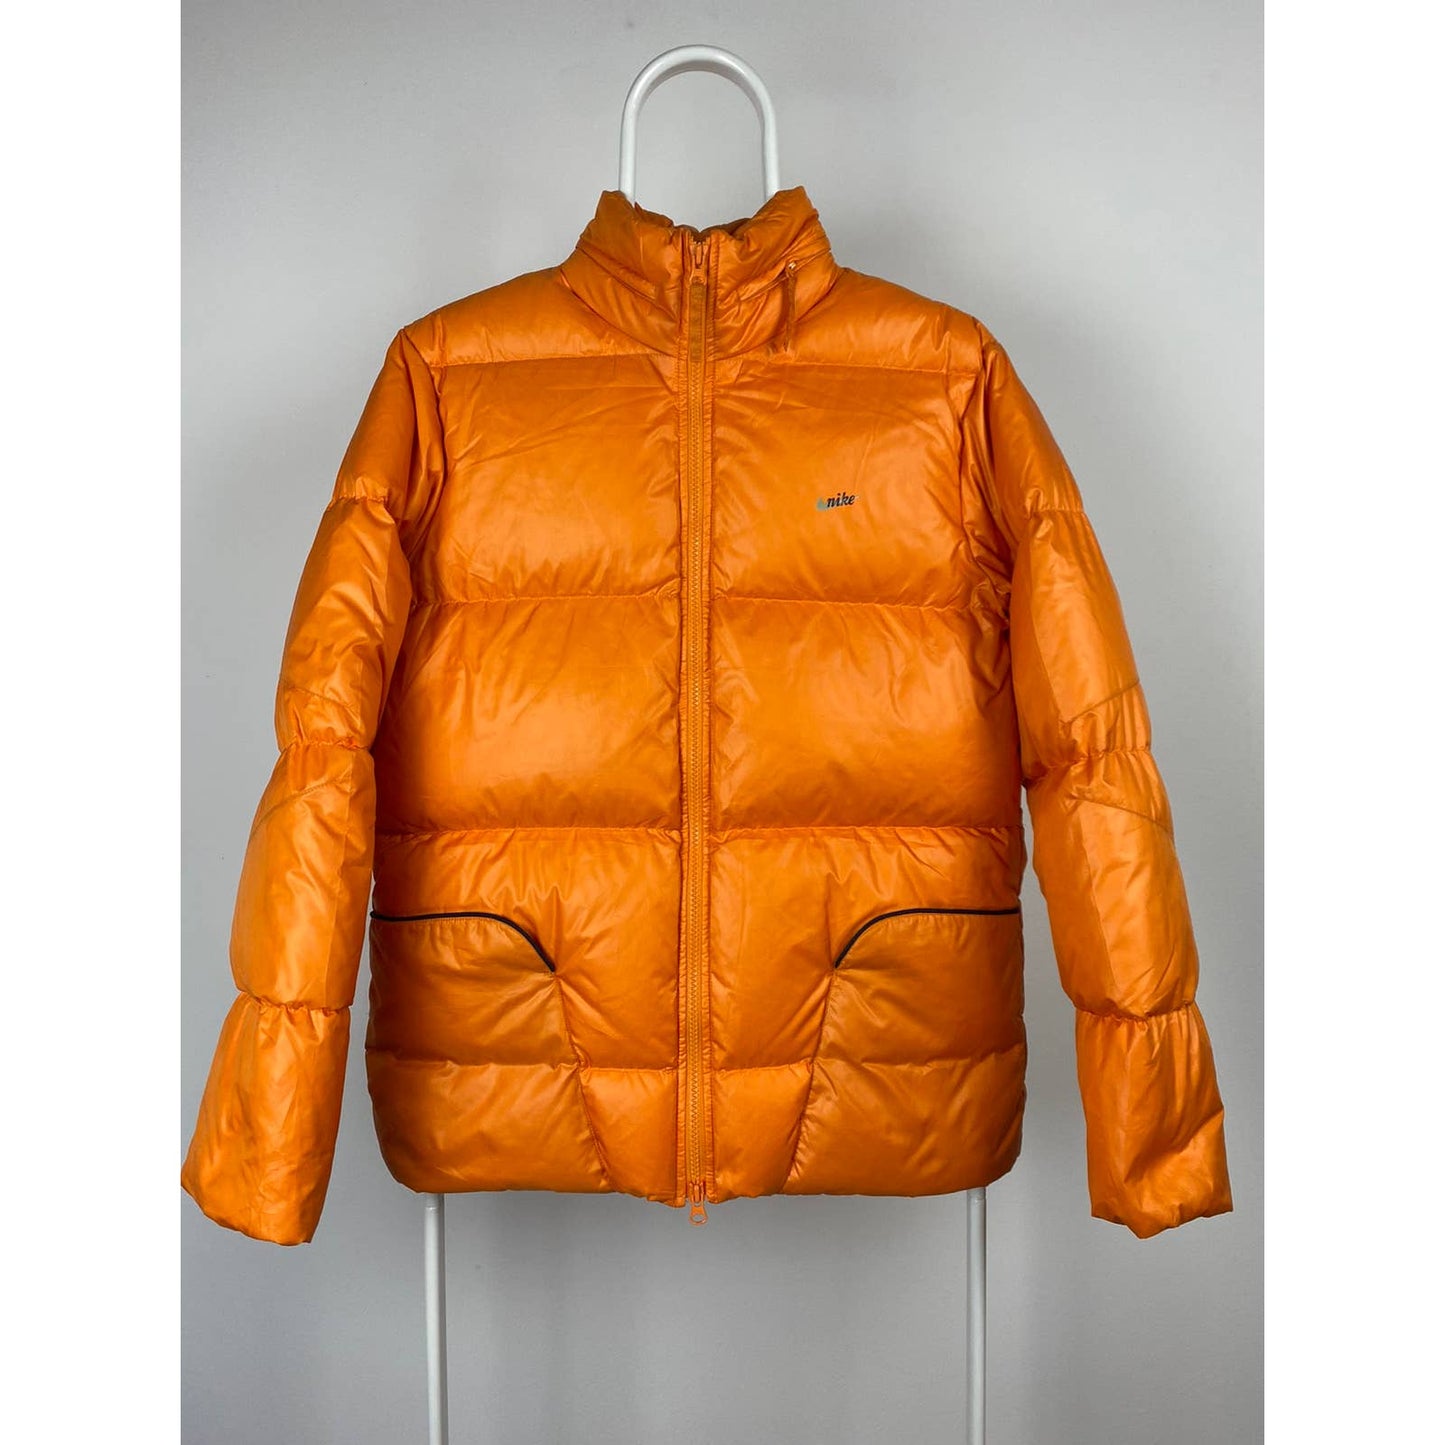 Nike vintage orange puffer jacket small swoosh 2000s